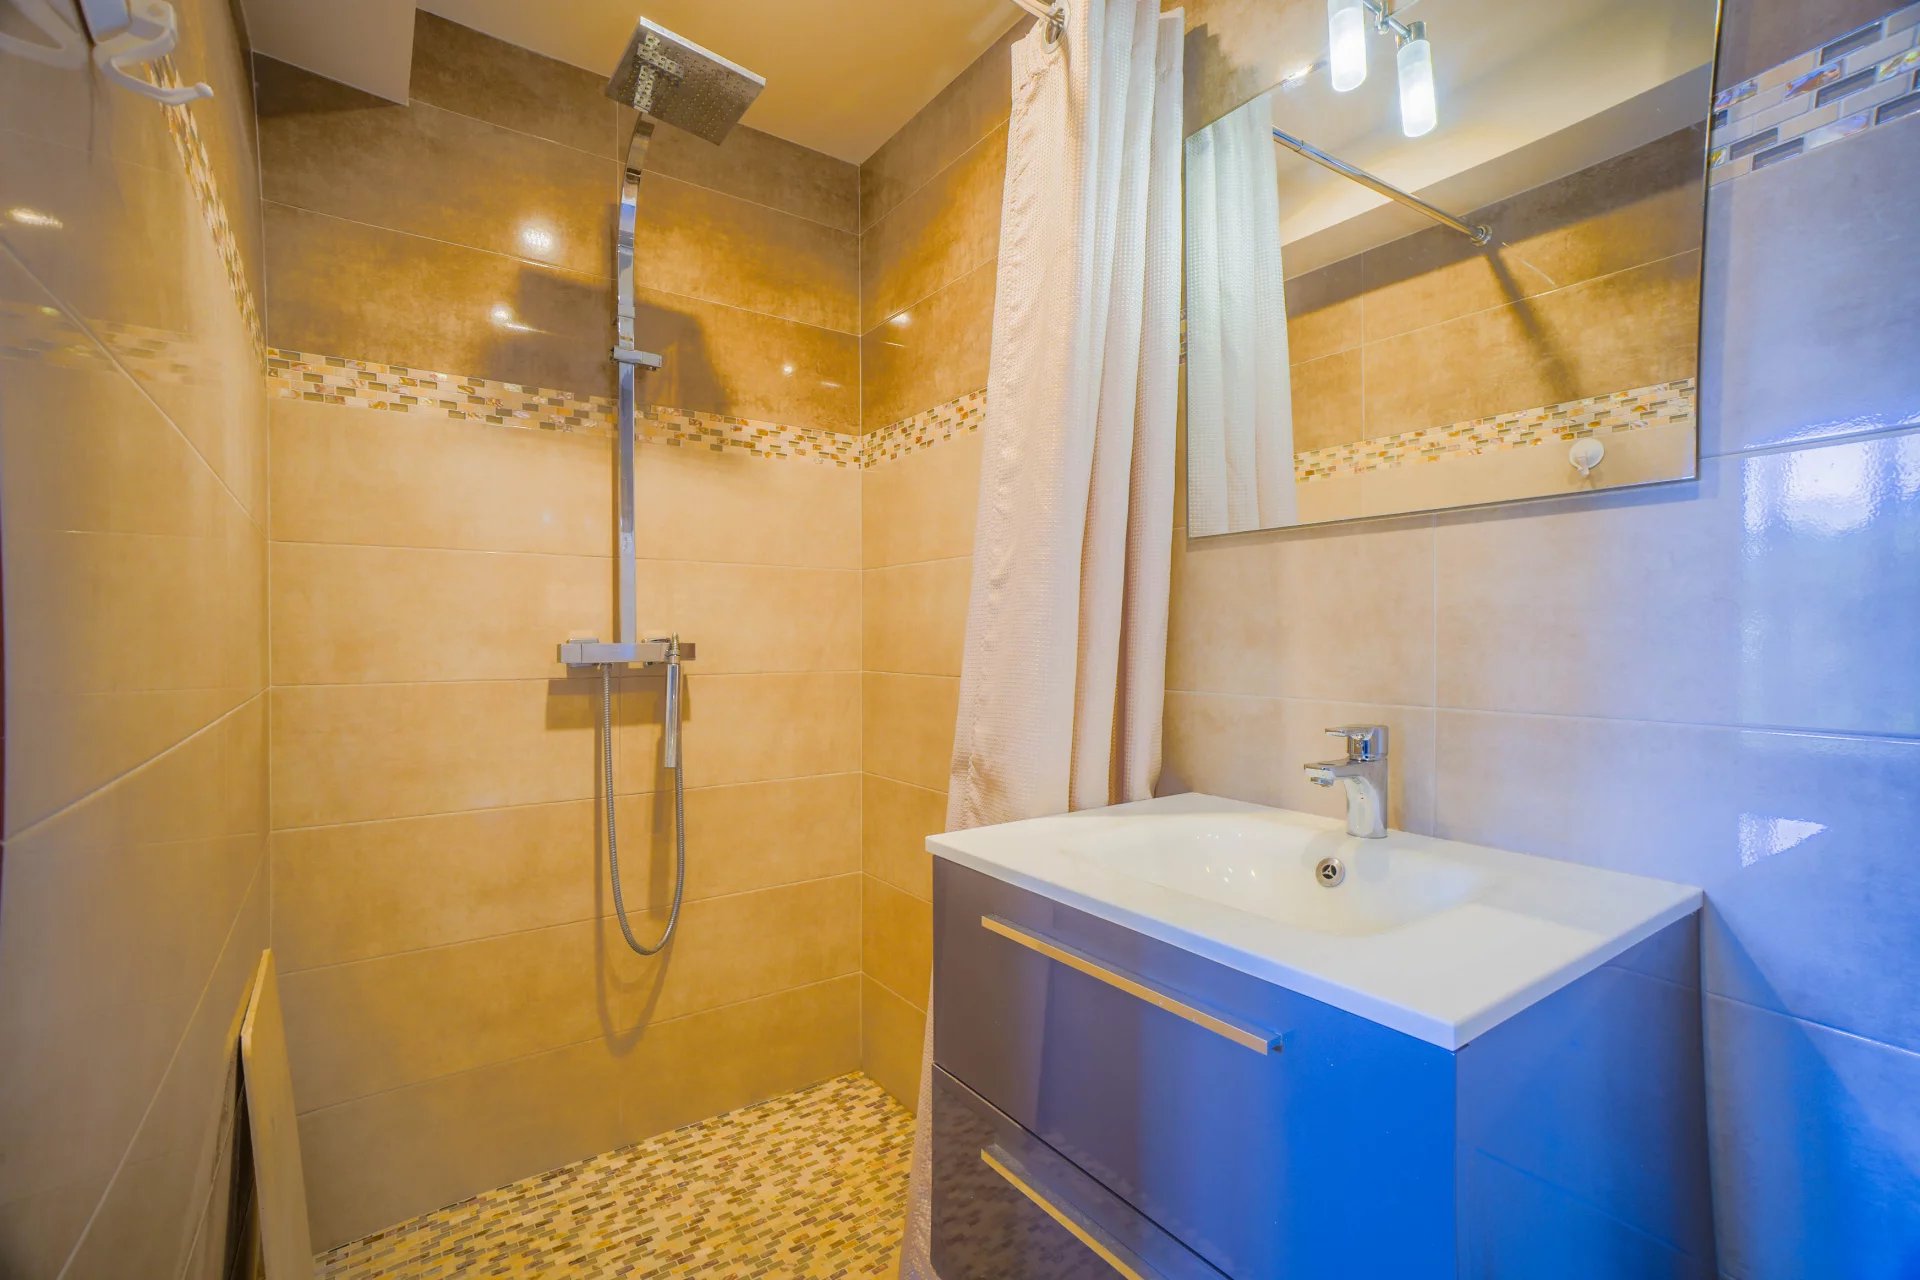 Saint-Gély-du-Fesc, Languedoc-Roussillon, 34980, FR, 7 Bedrooms Bedrooms, ,1 BathroomBathrooms,Residential,For Sale,1486410